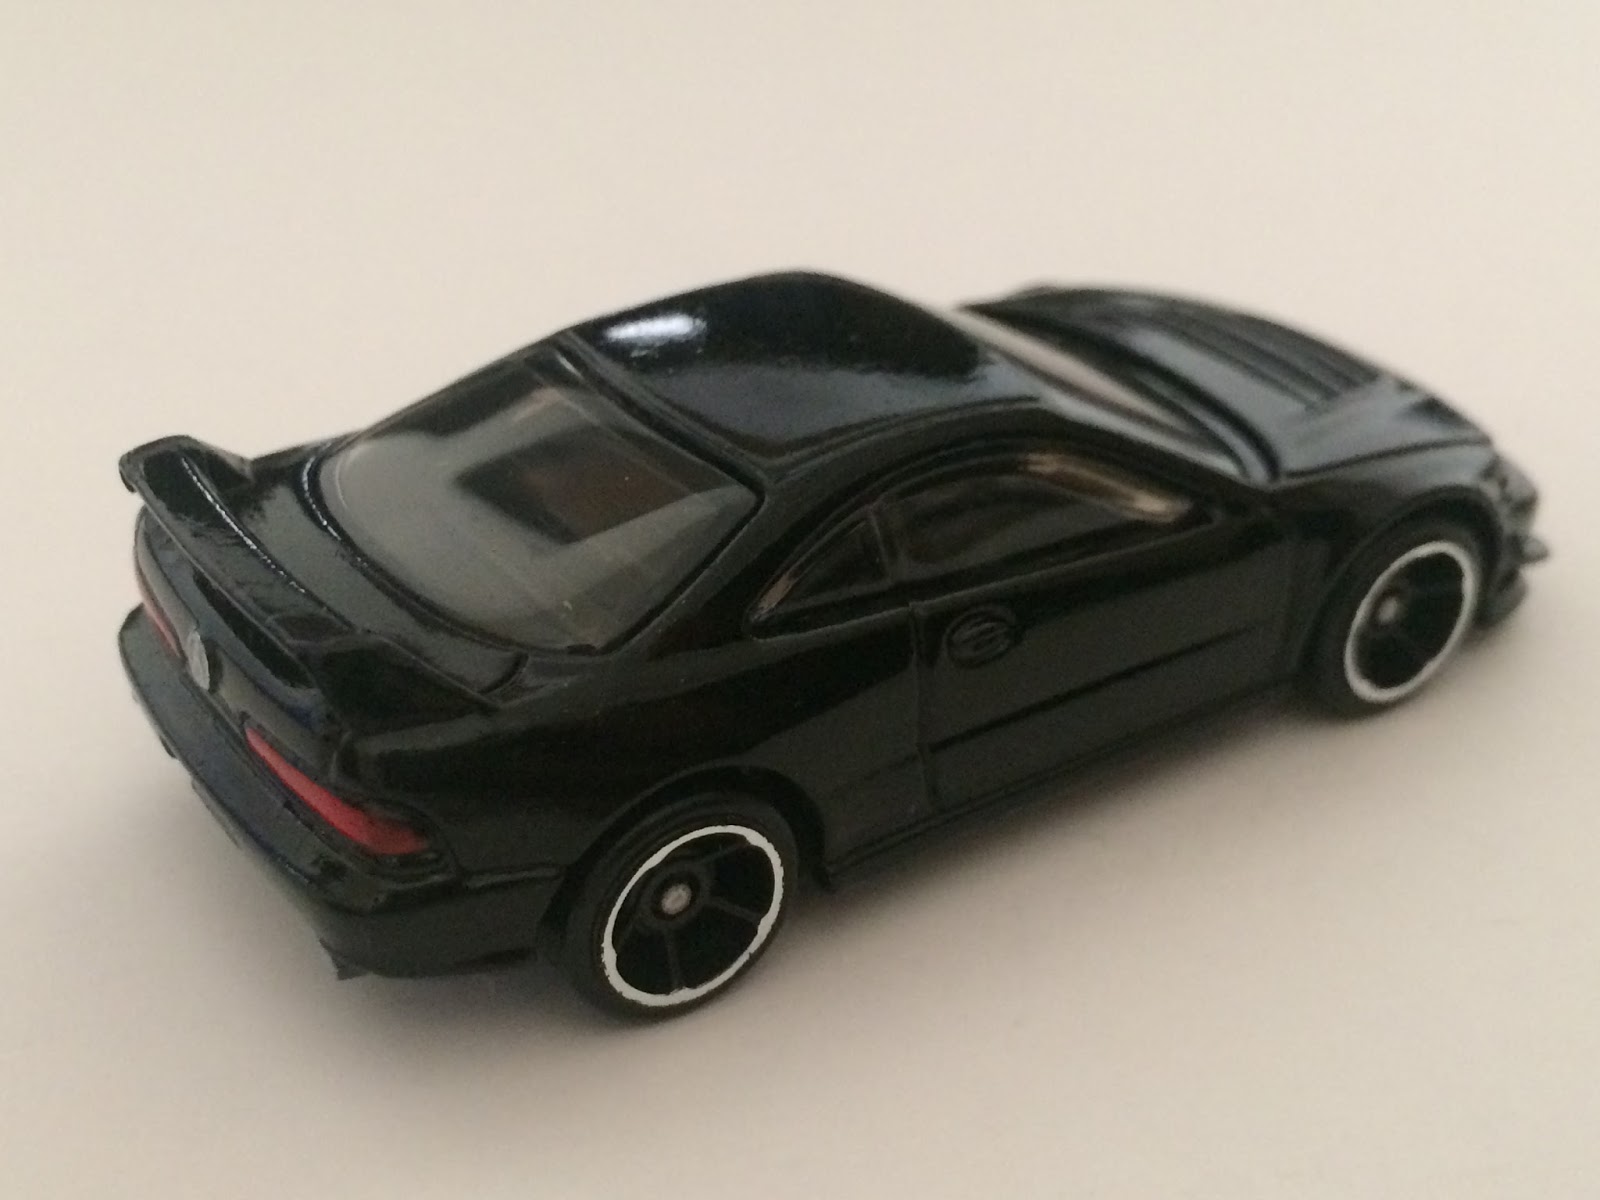 LA's Diecast Blog: Hot Wheels Acura Integra Type R Custom ...